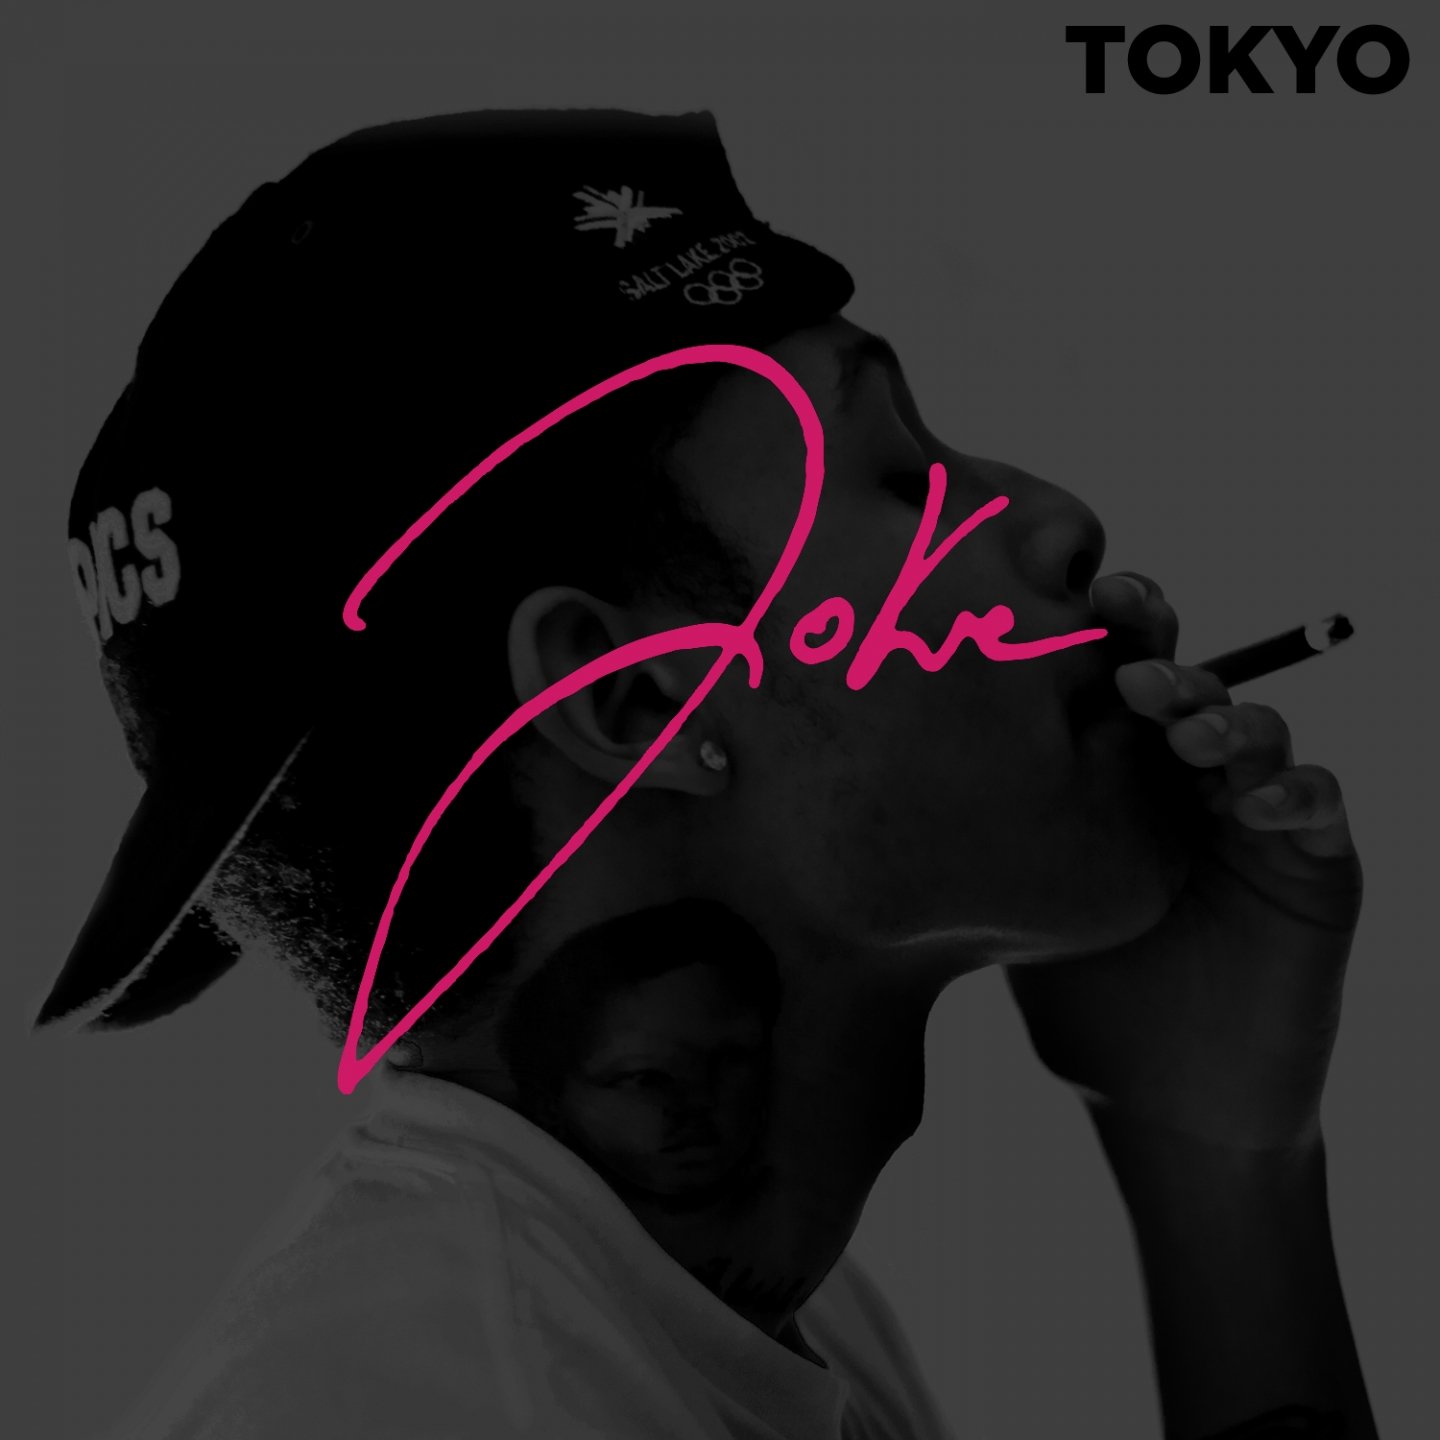 Joke-Tokyo-FR-2CD-FLAC-2013-Mrflac Download